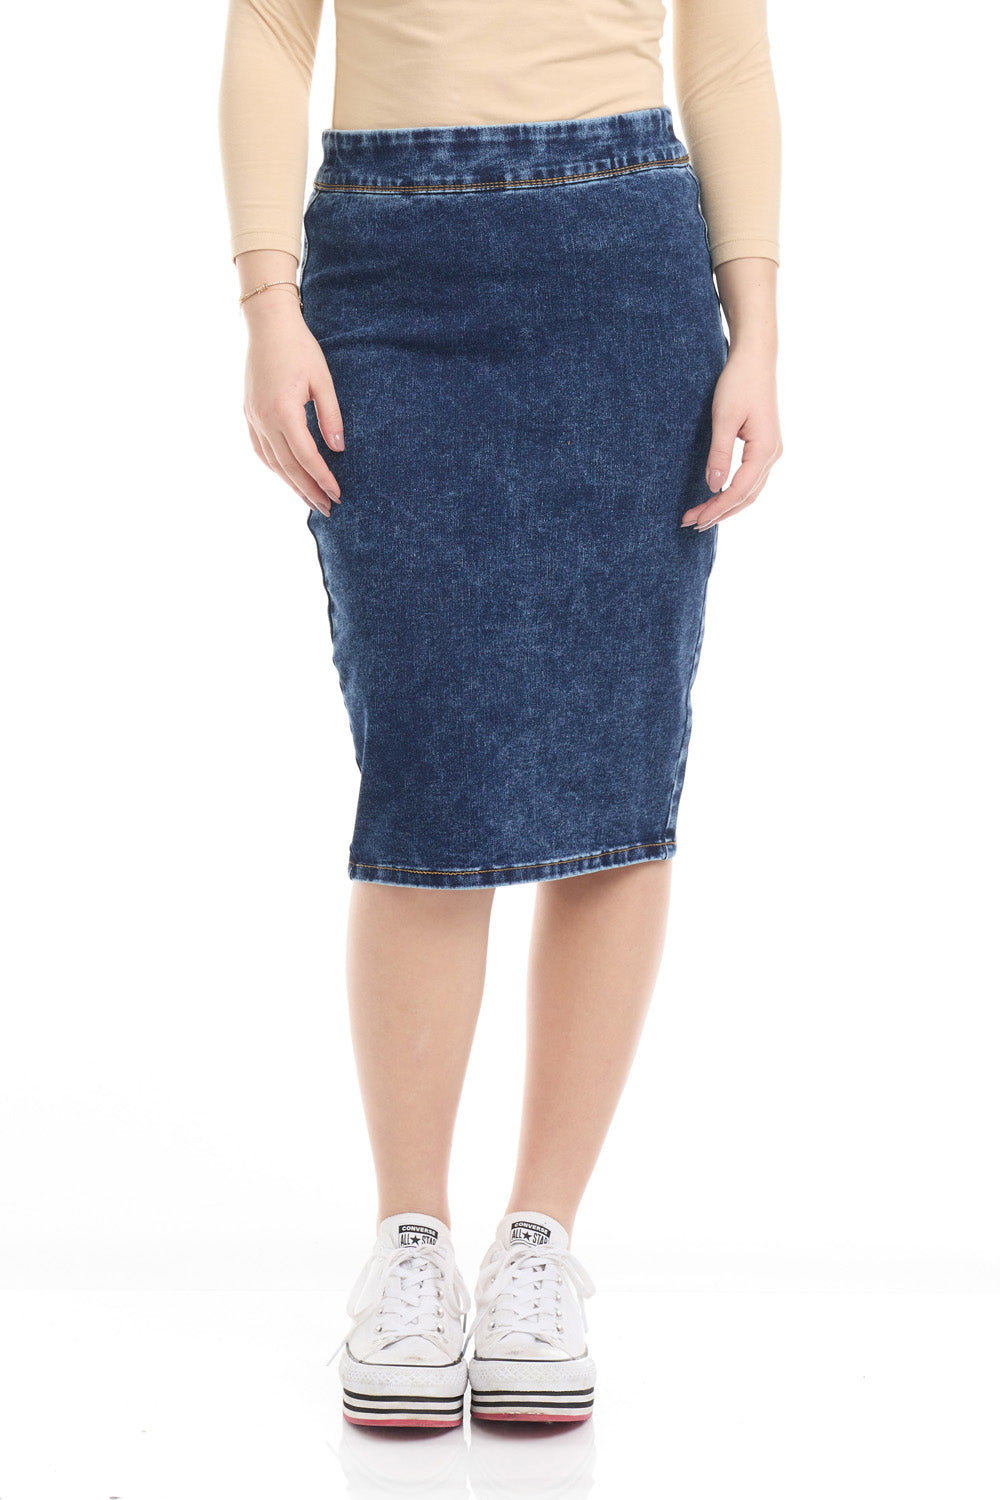 blue modest knee length jean skirt without pockets or beltloops